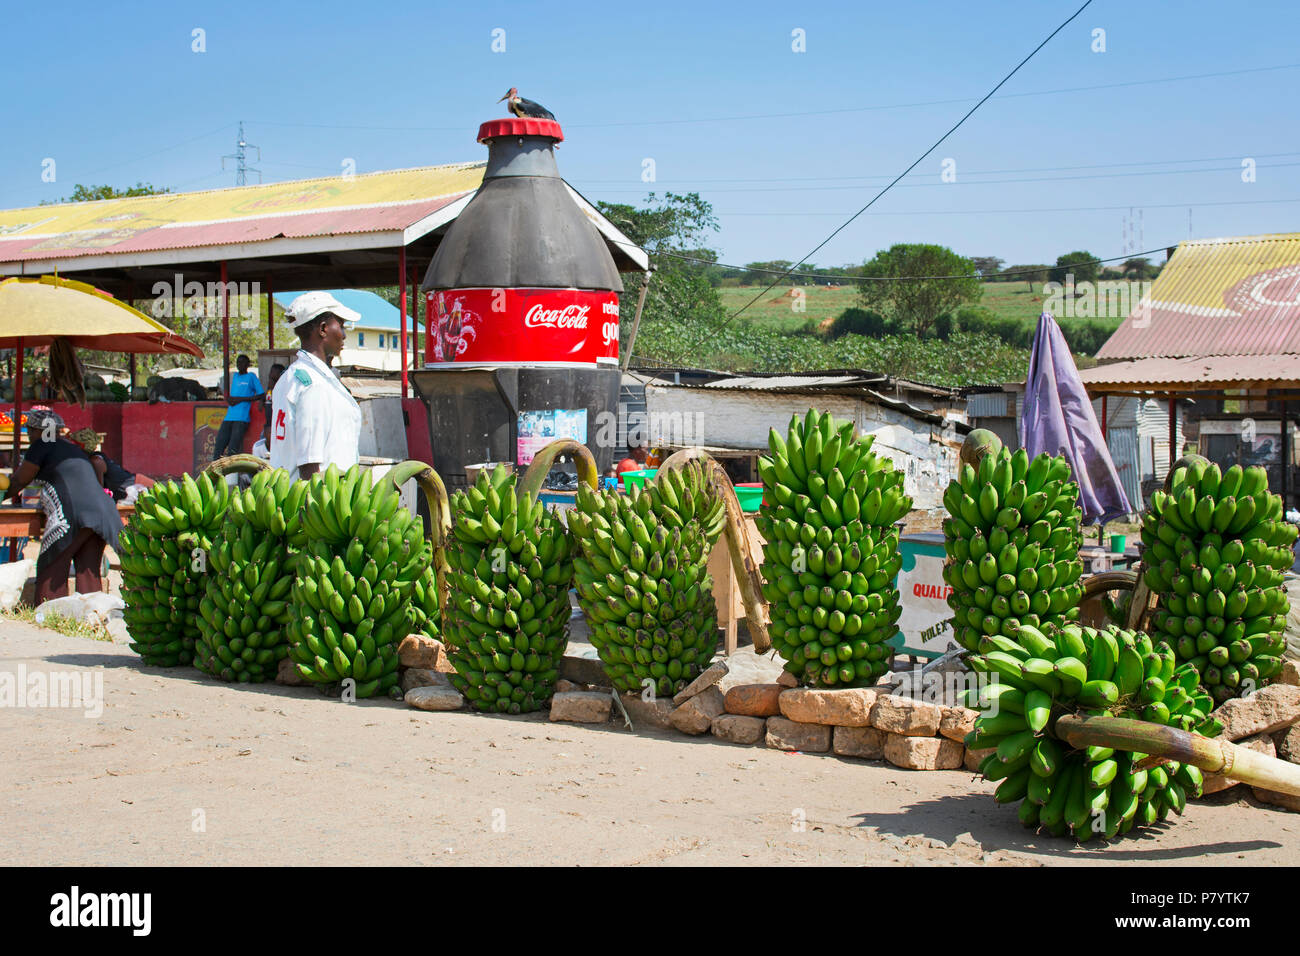 Matooke, Green Bananas, Plantains National Food of Uganda, Roadside Market Stock Photo